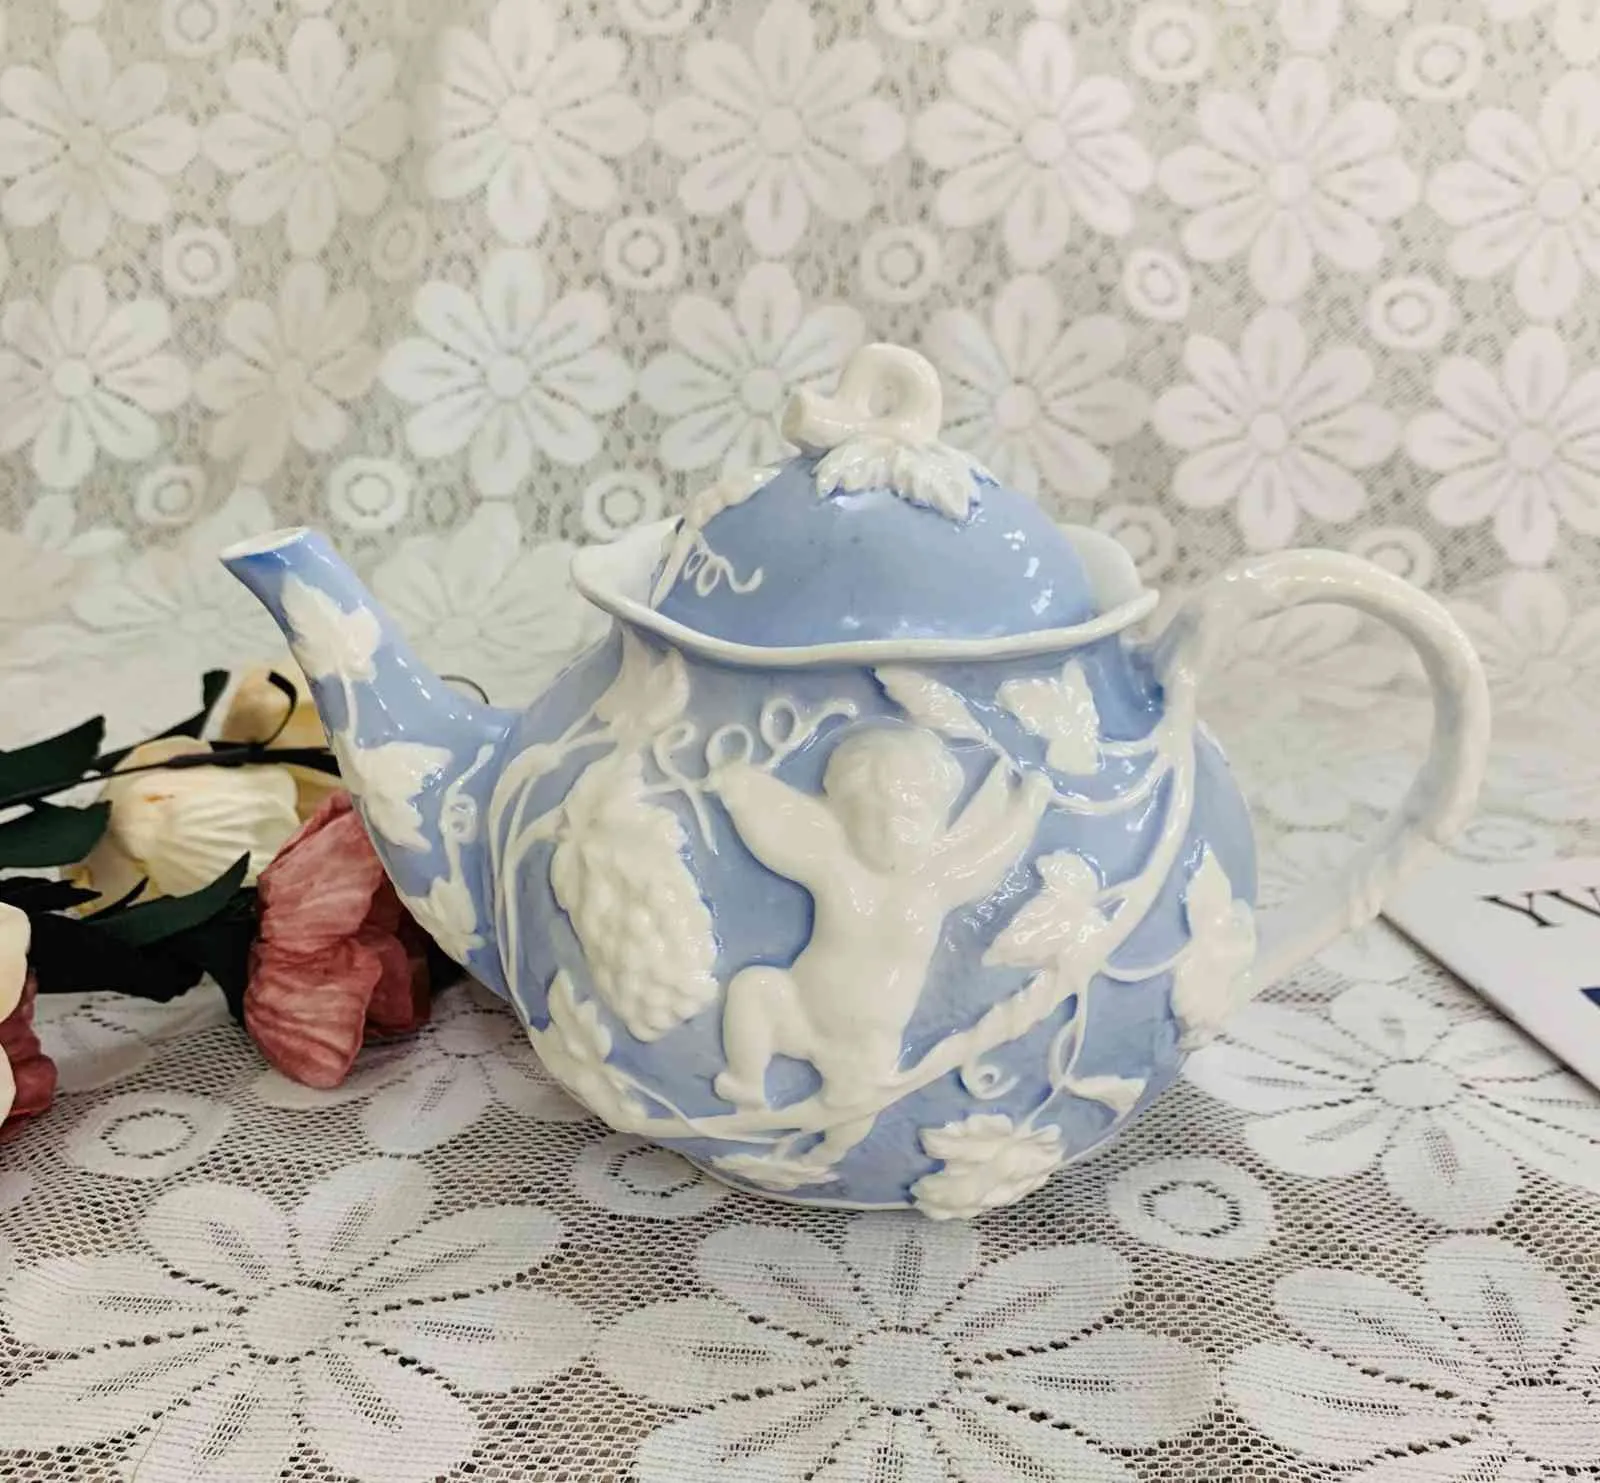 Piattino tazza in stile europeo Teiera tè pomeridiano in ceramica di lusso in rilievo elegante Set da caffè semplice di fascia alta199k